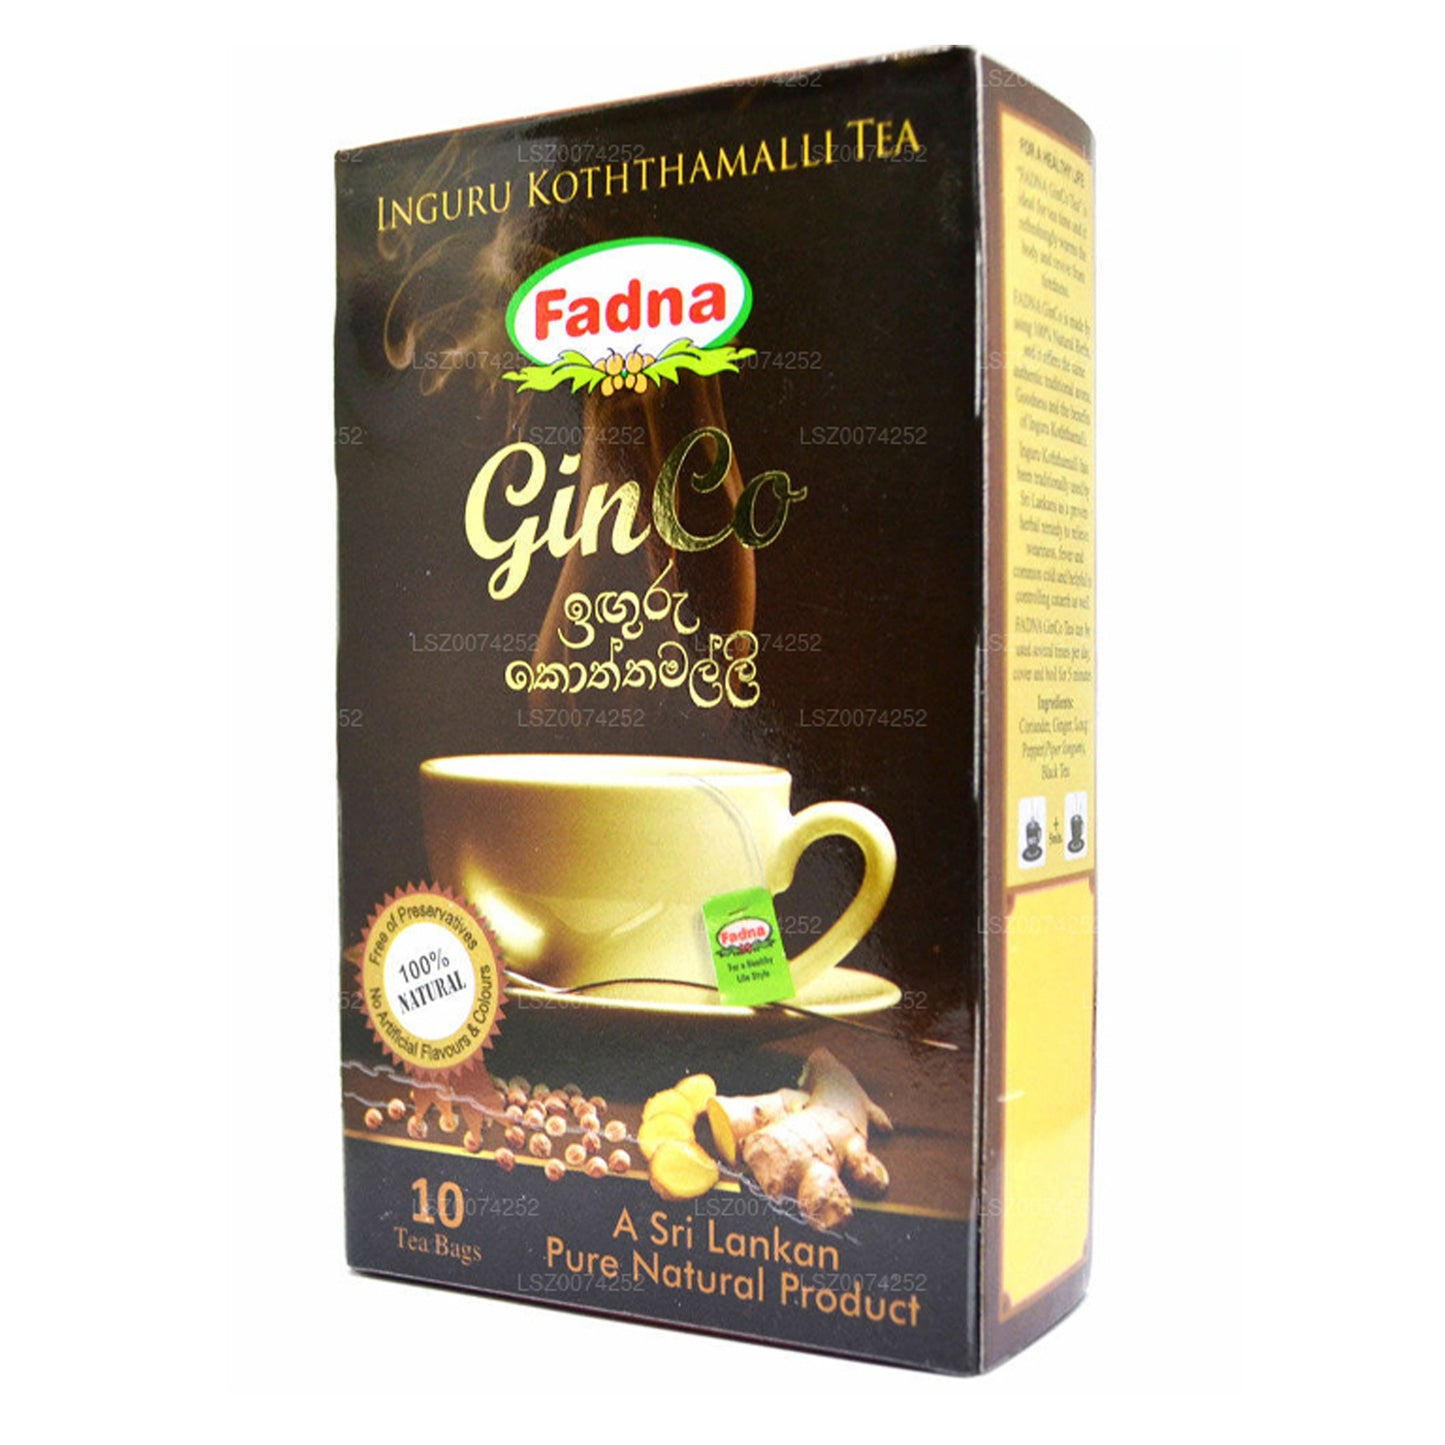 Fadna Ginger and Coriander Flavored Tea (20g) 10 Tea Bags